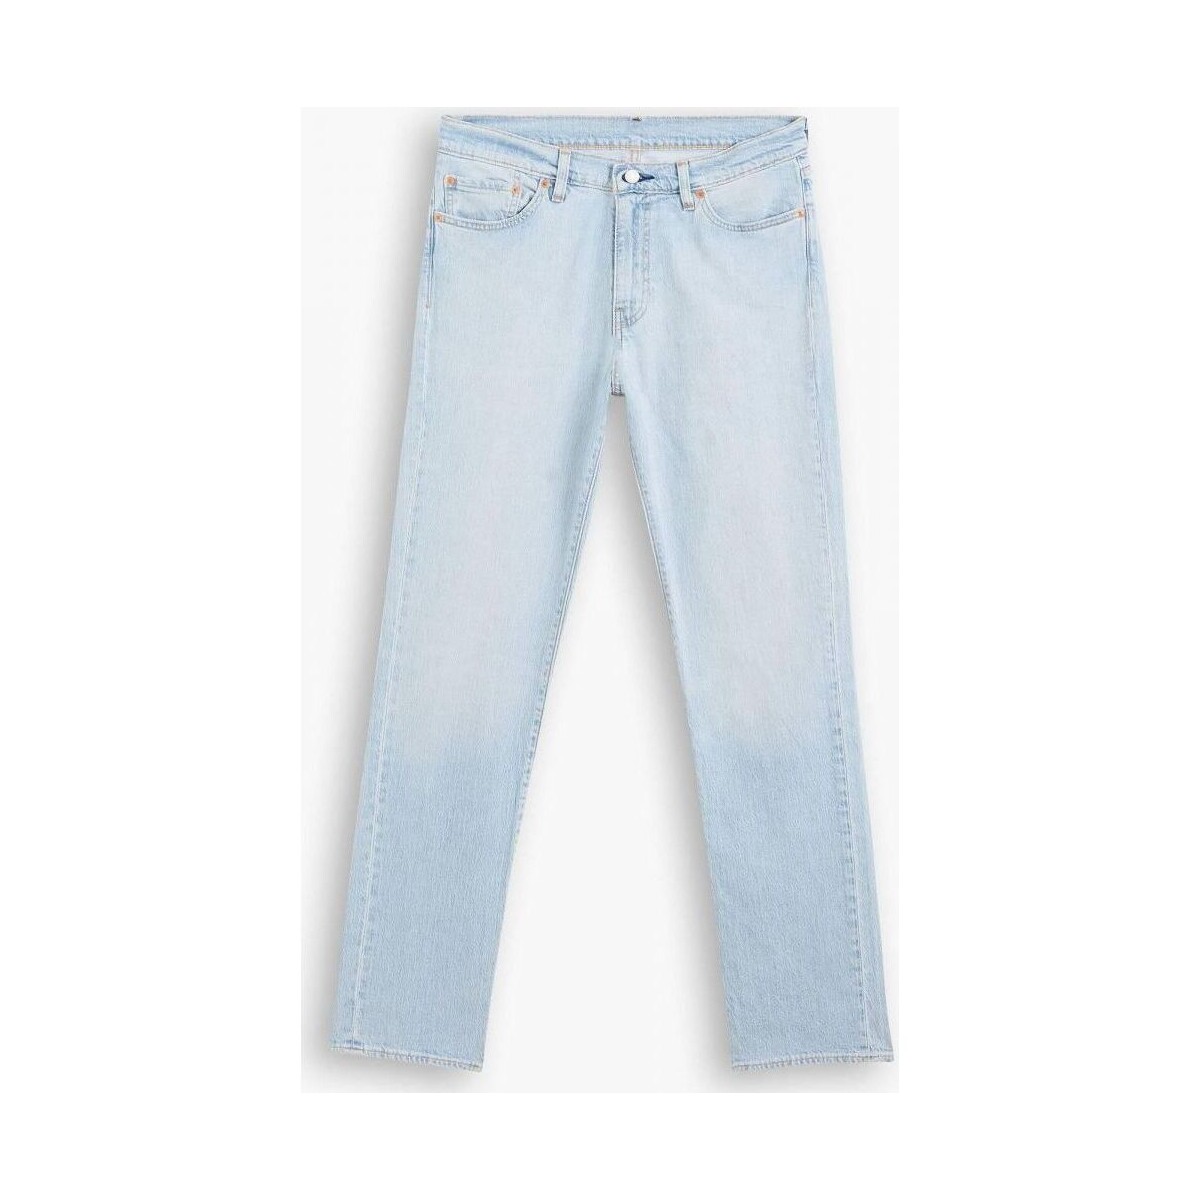 Abbigliamento Uomo Jeans Levi's 04511 5462 - 511 SLIM-EVERETT DAYBREAK Blu